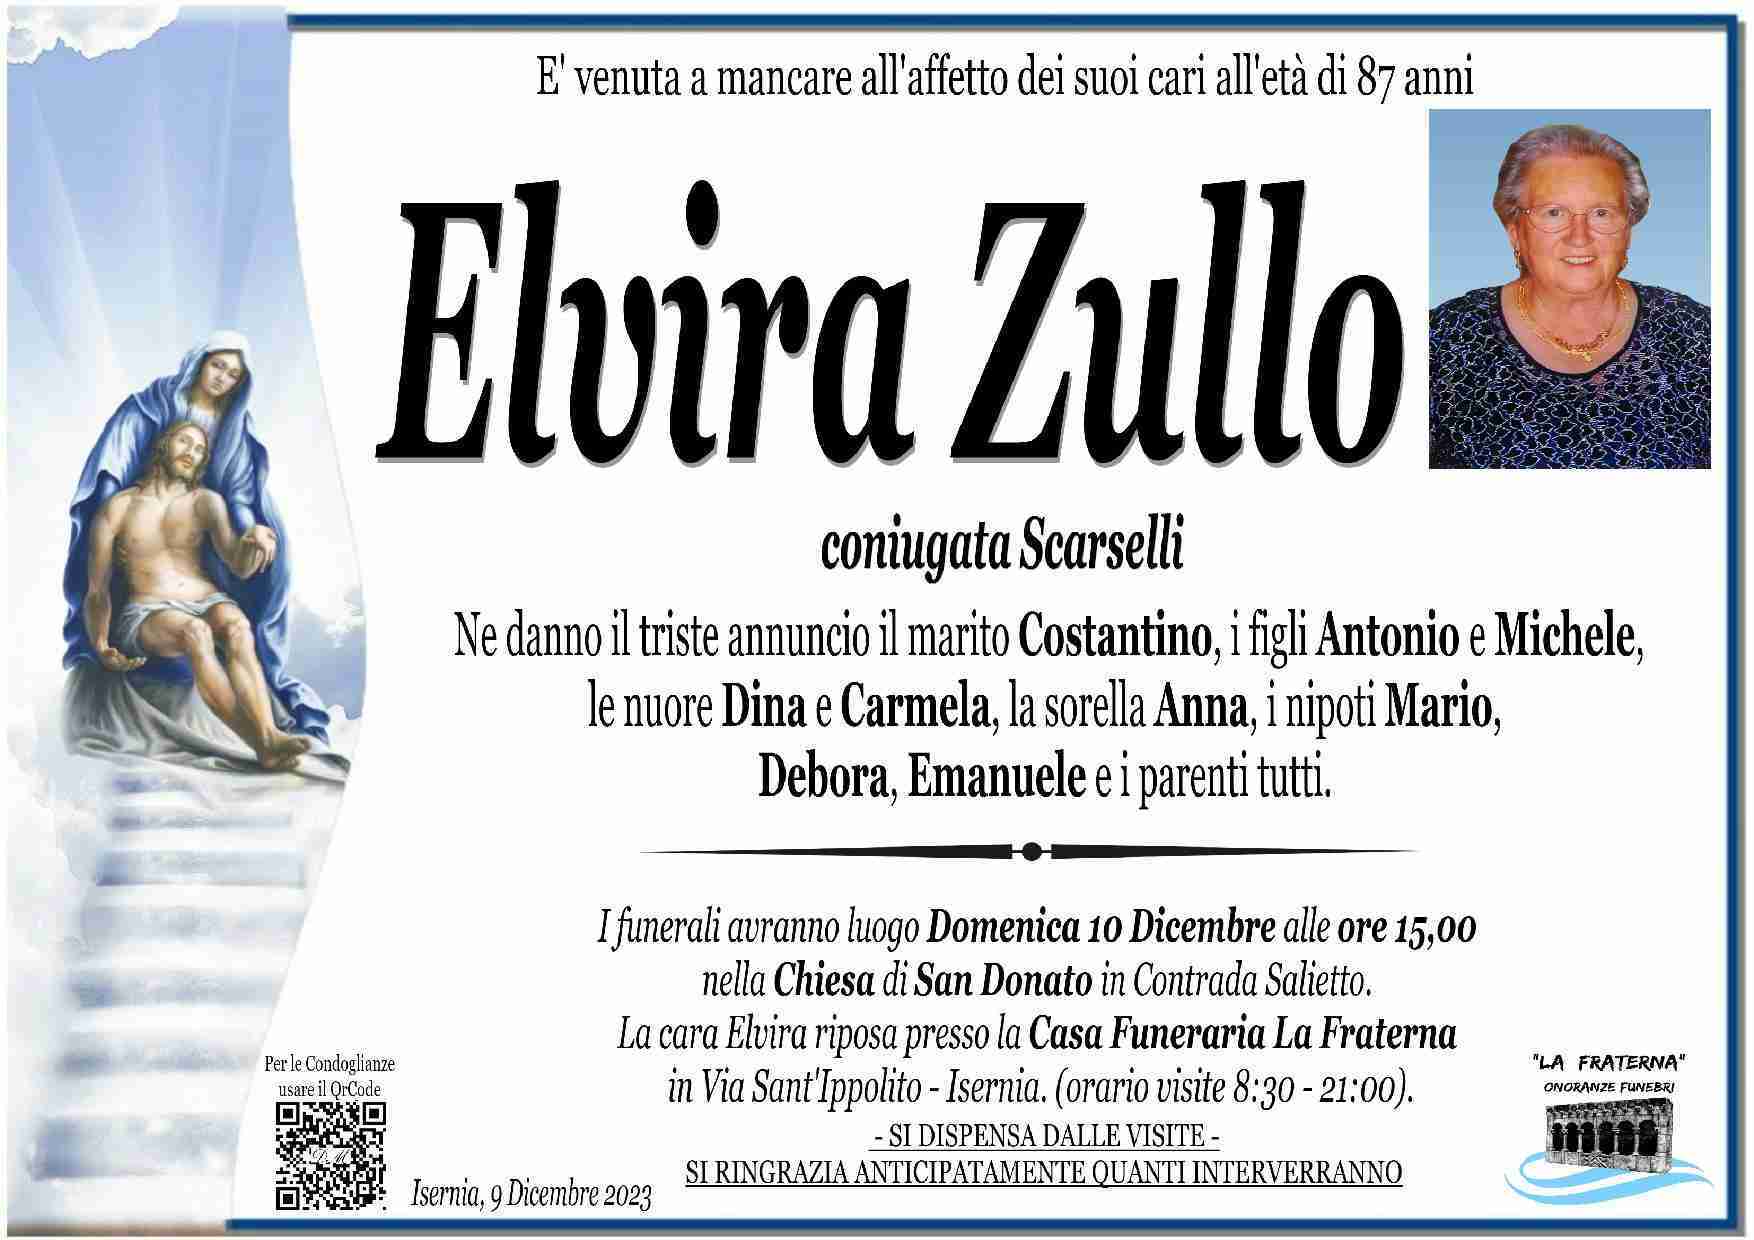 Elvira Zullo